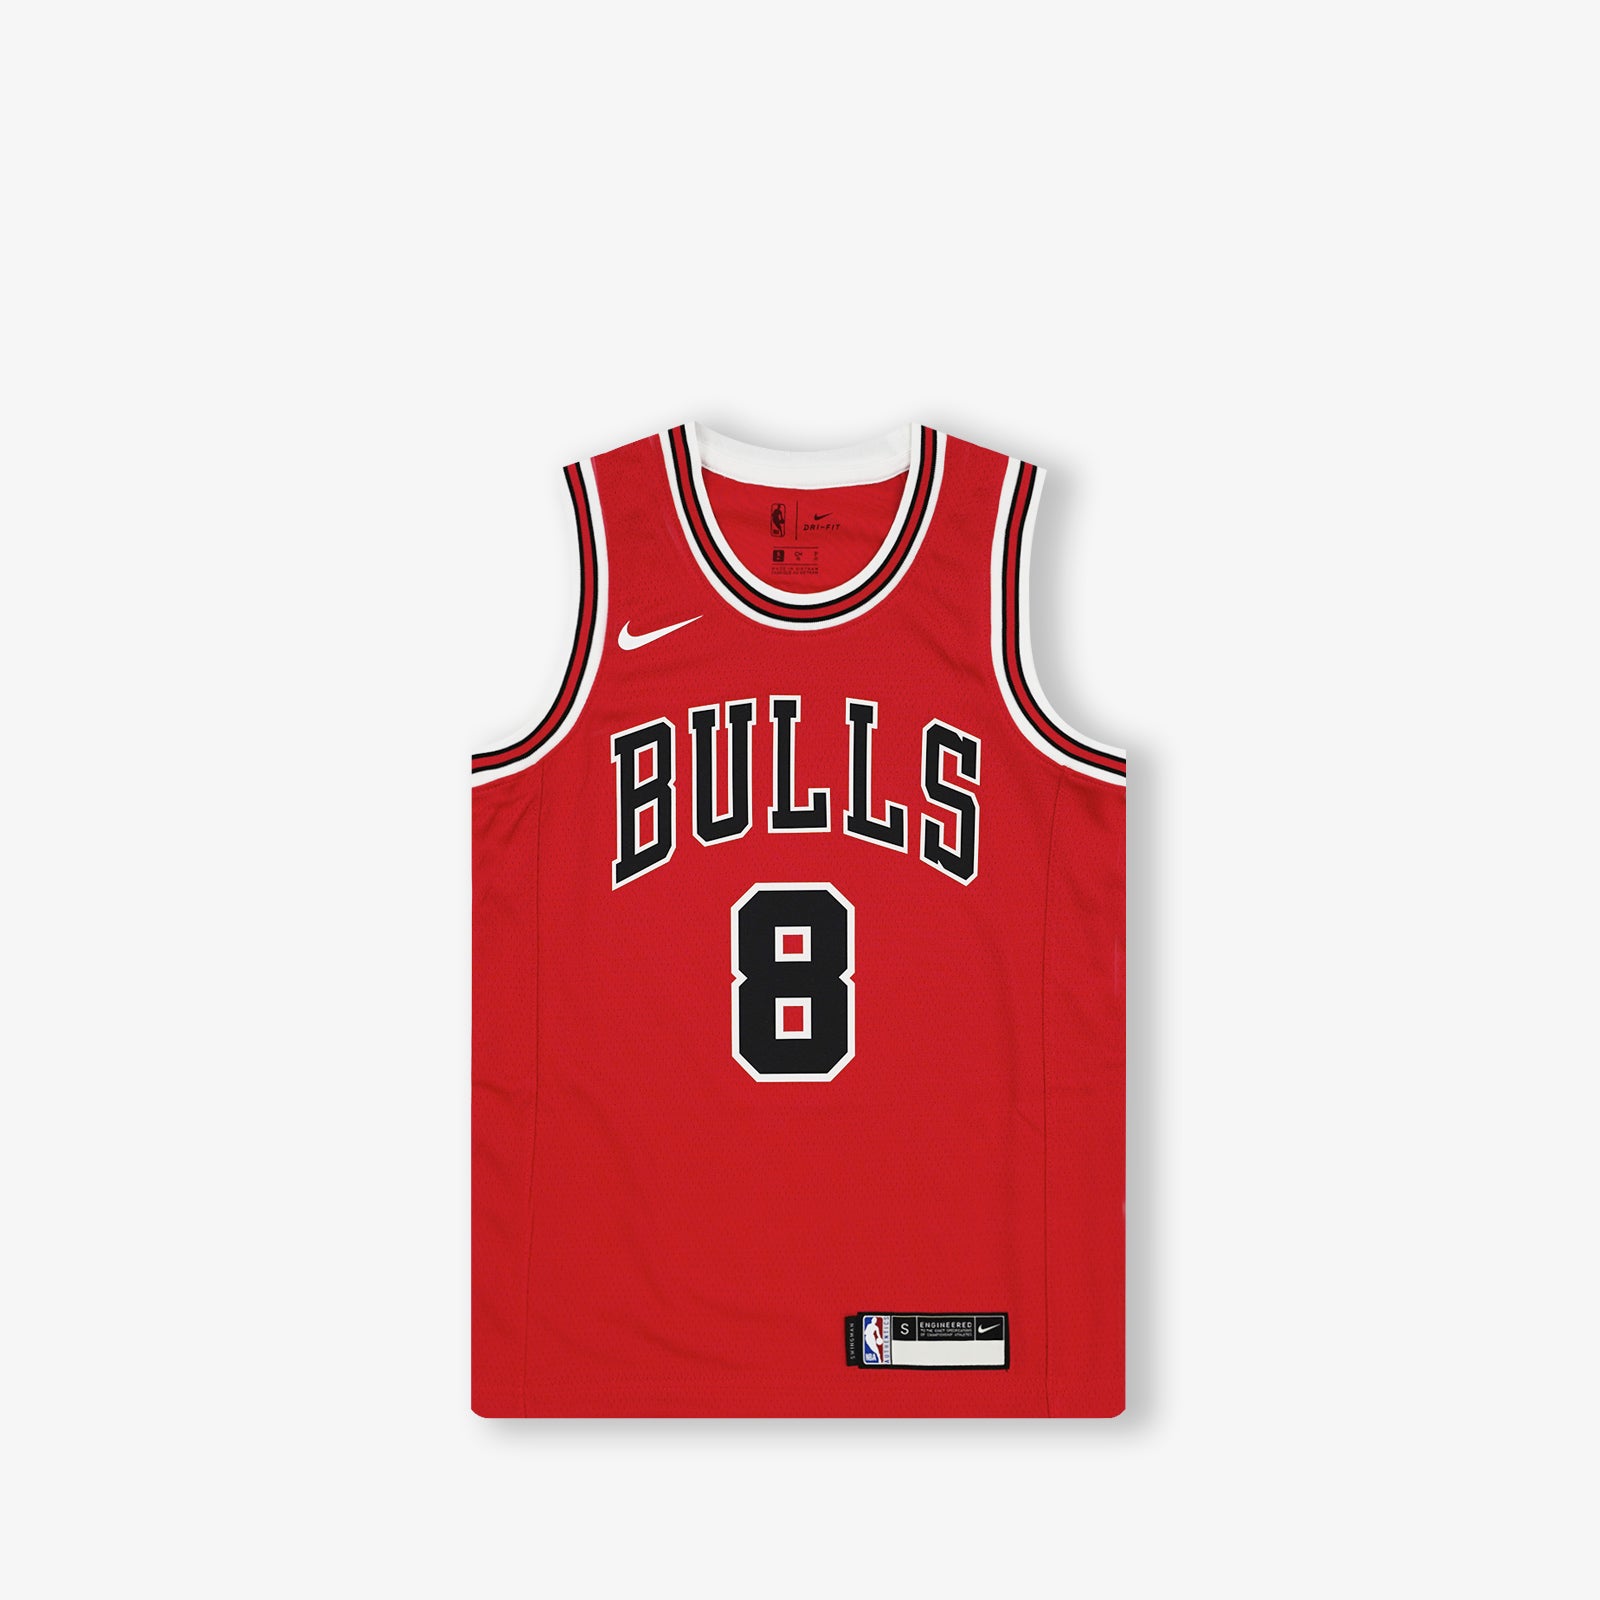 Nike NBA Zach LaVine Chicago Bulls Dri-Fit City Edition Jersey White/Red